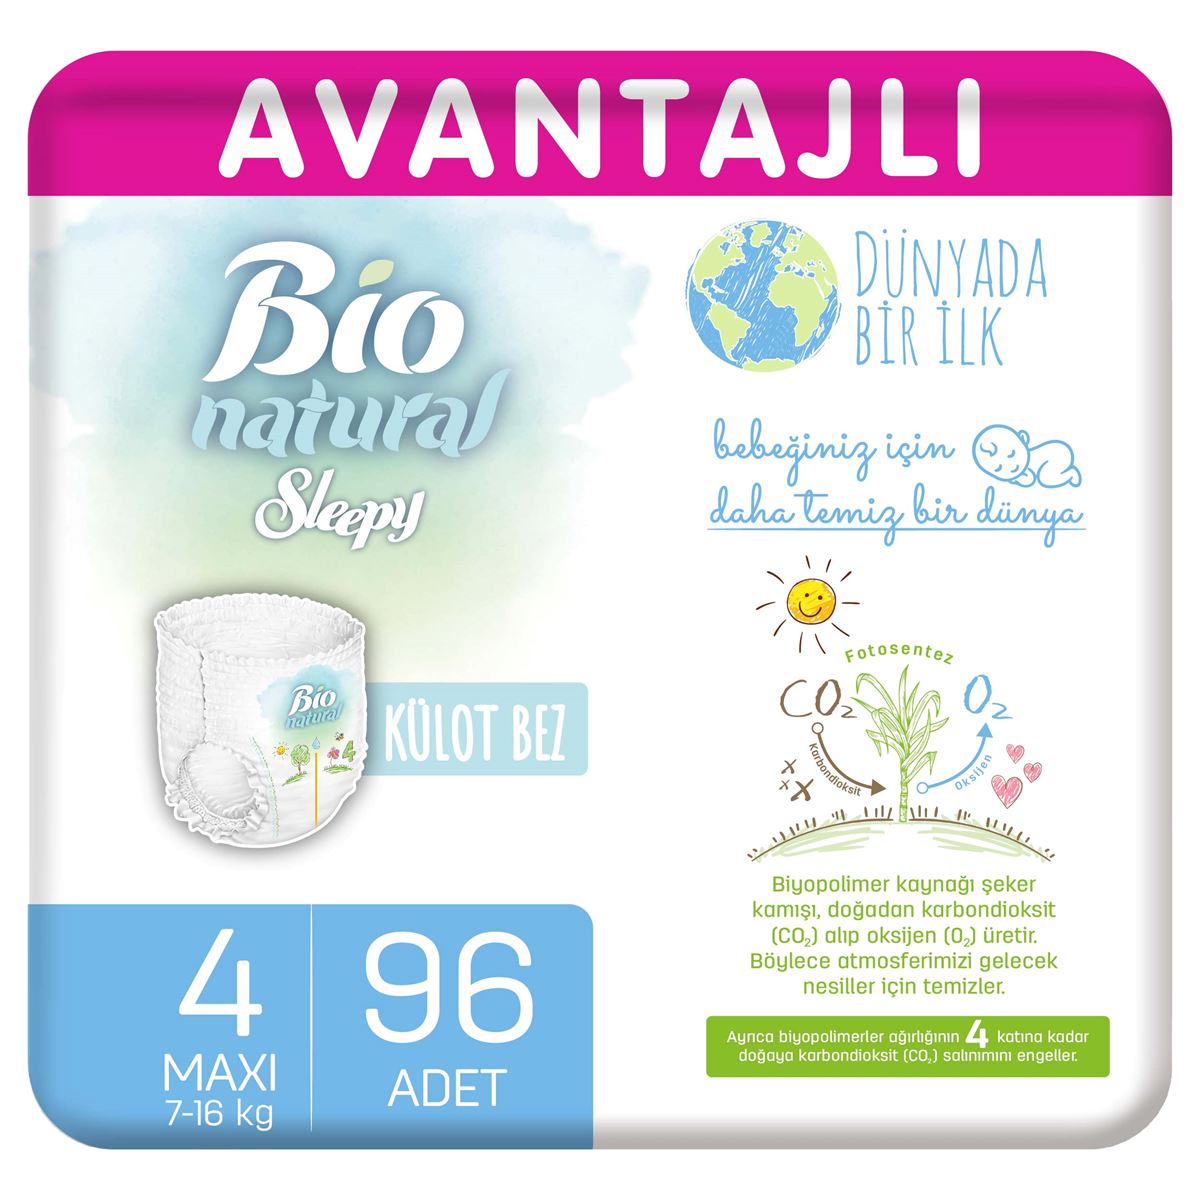 Sleepy Bio Natural Avantajlı Külot Bez 4 Numara Maxi 96 Adet